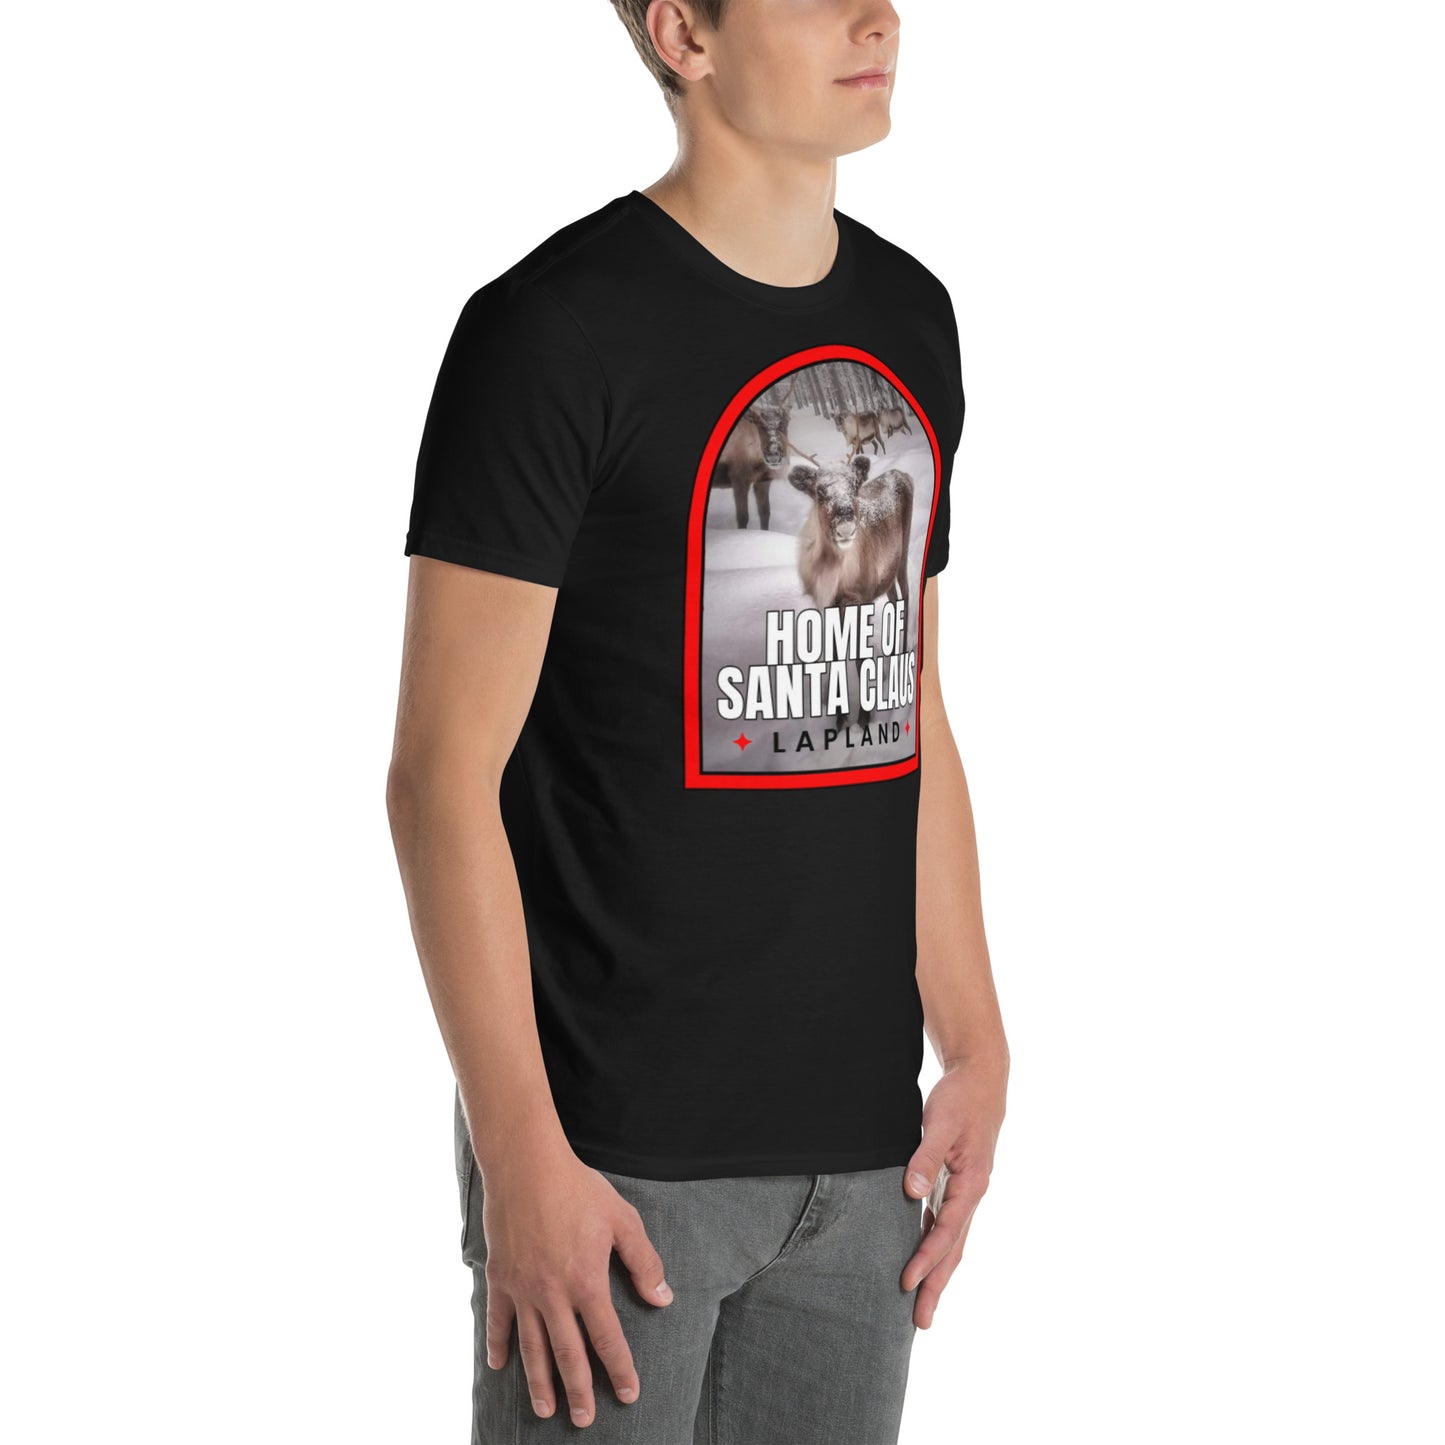 "Home of Santa Claus" unisex t-shirt